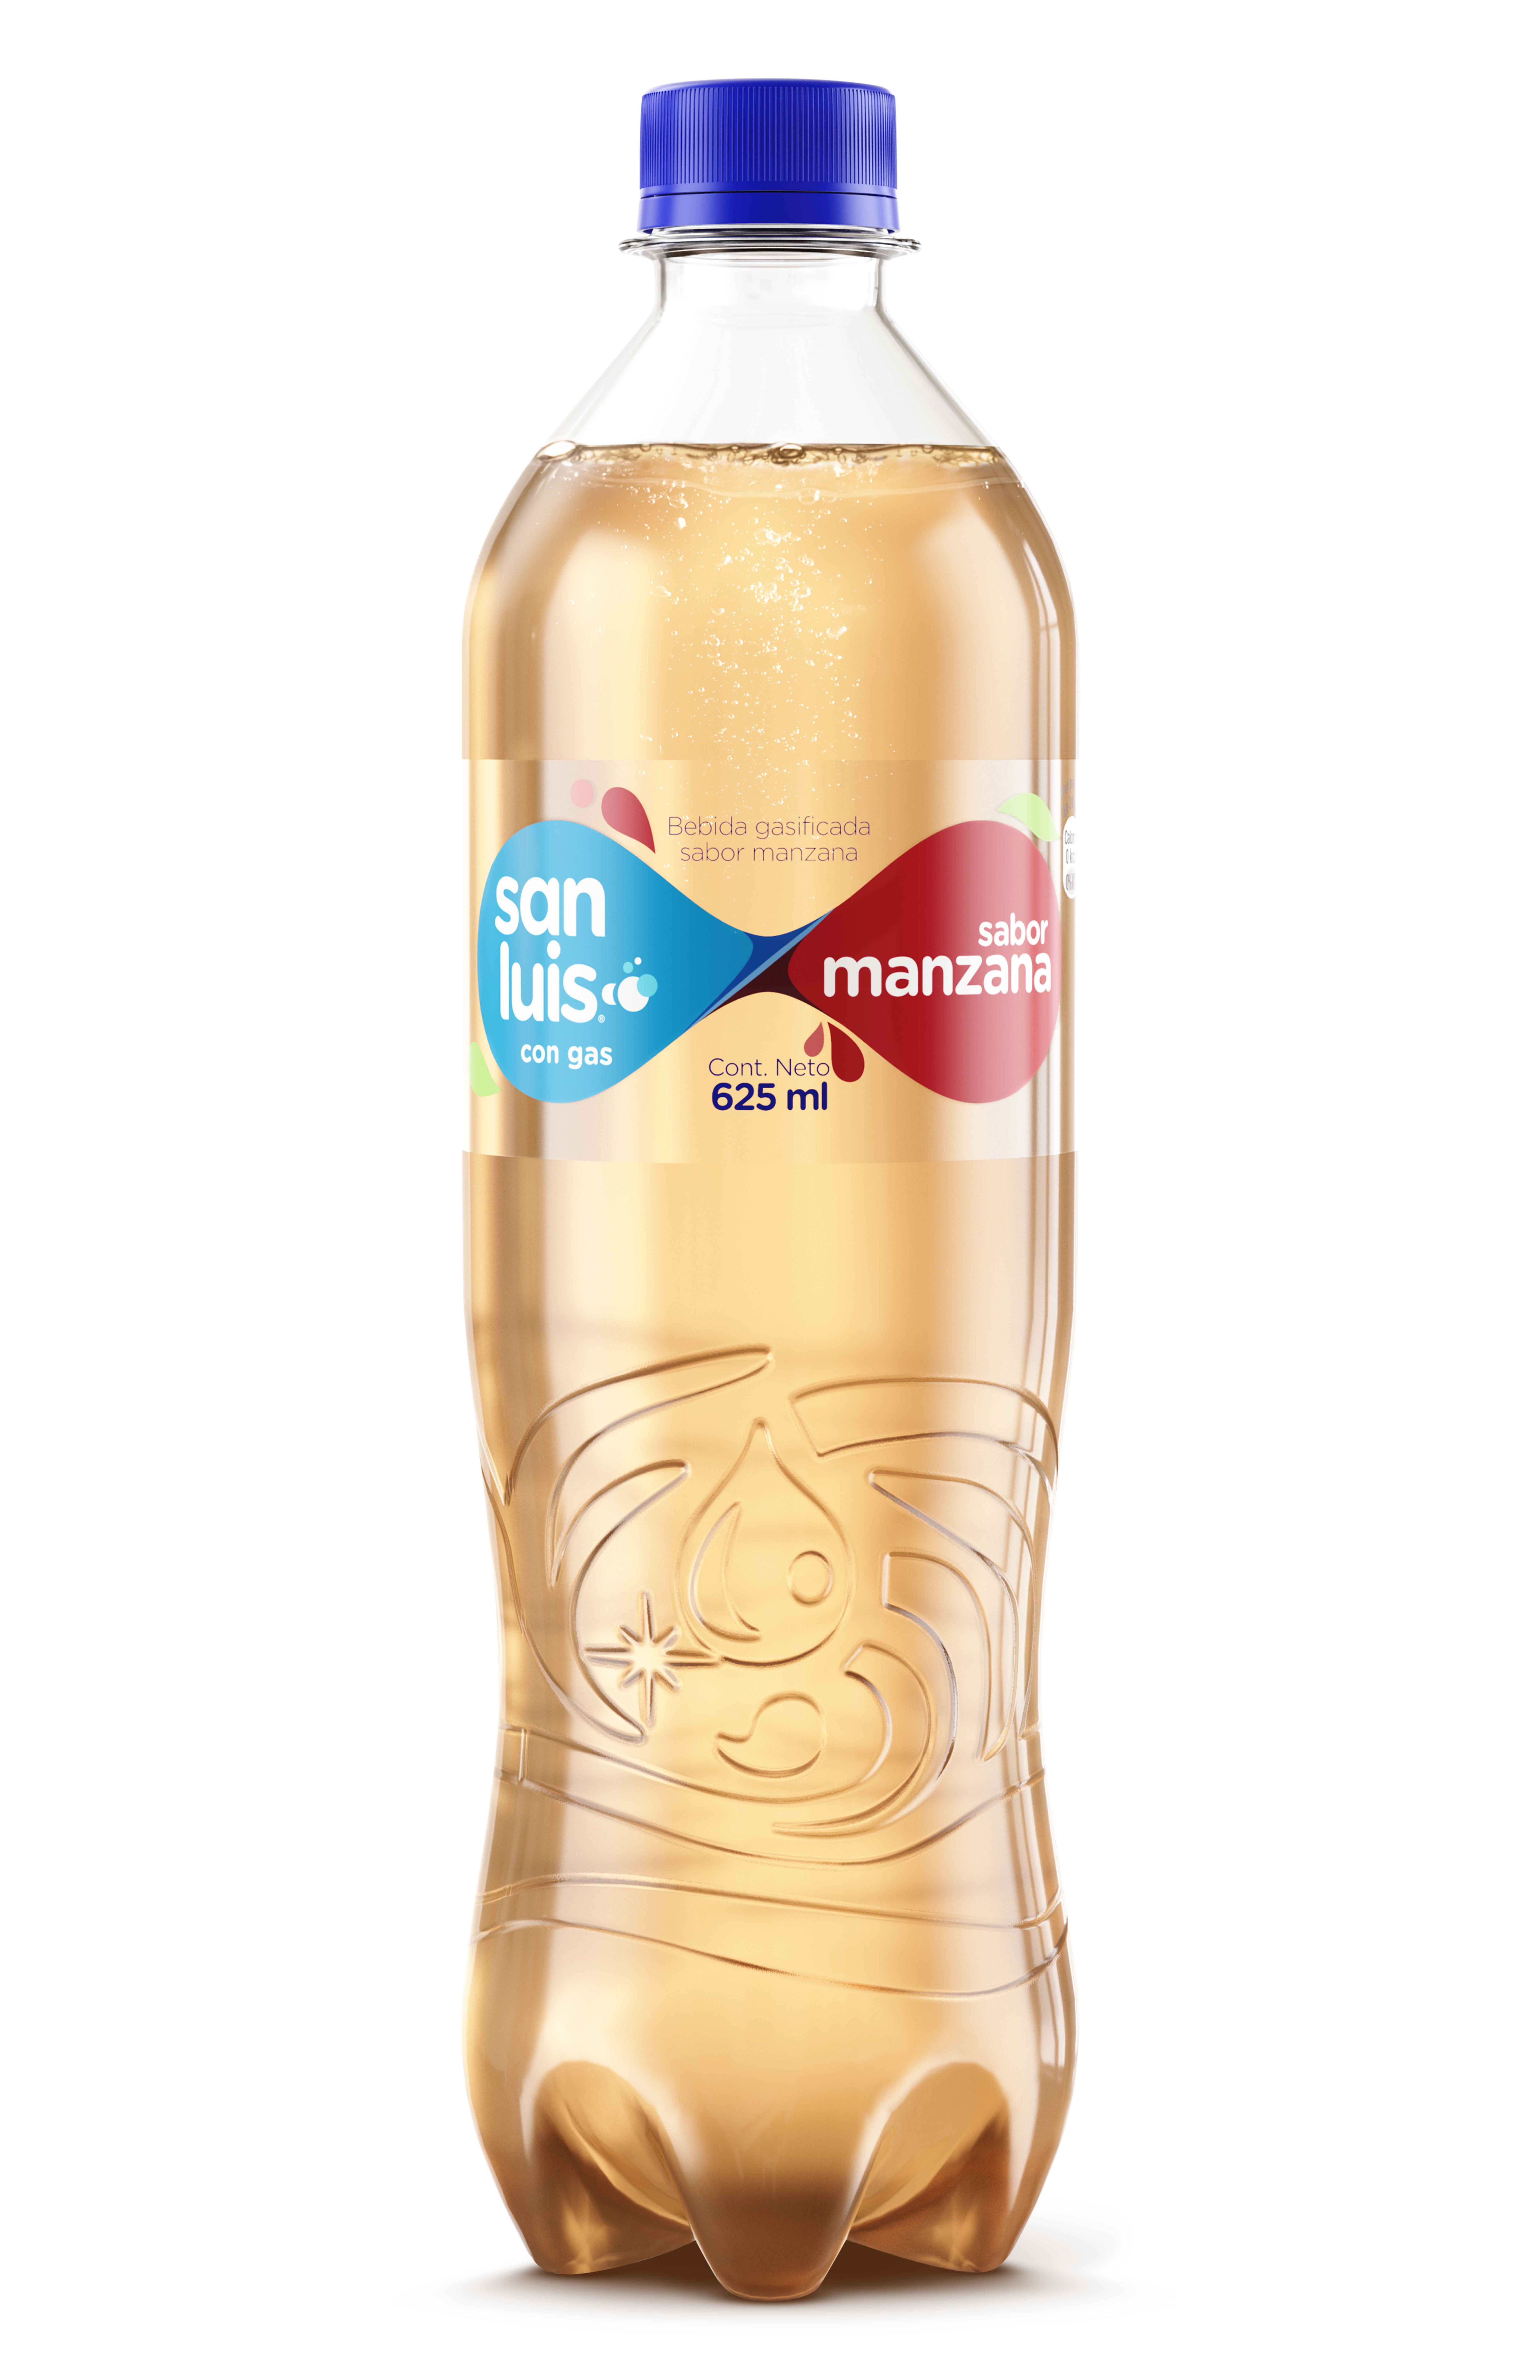 Botella de San Luis Manzana